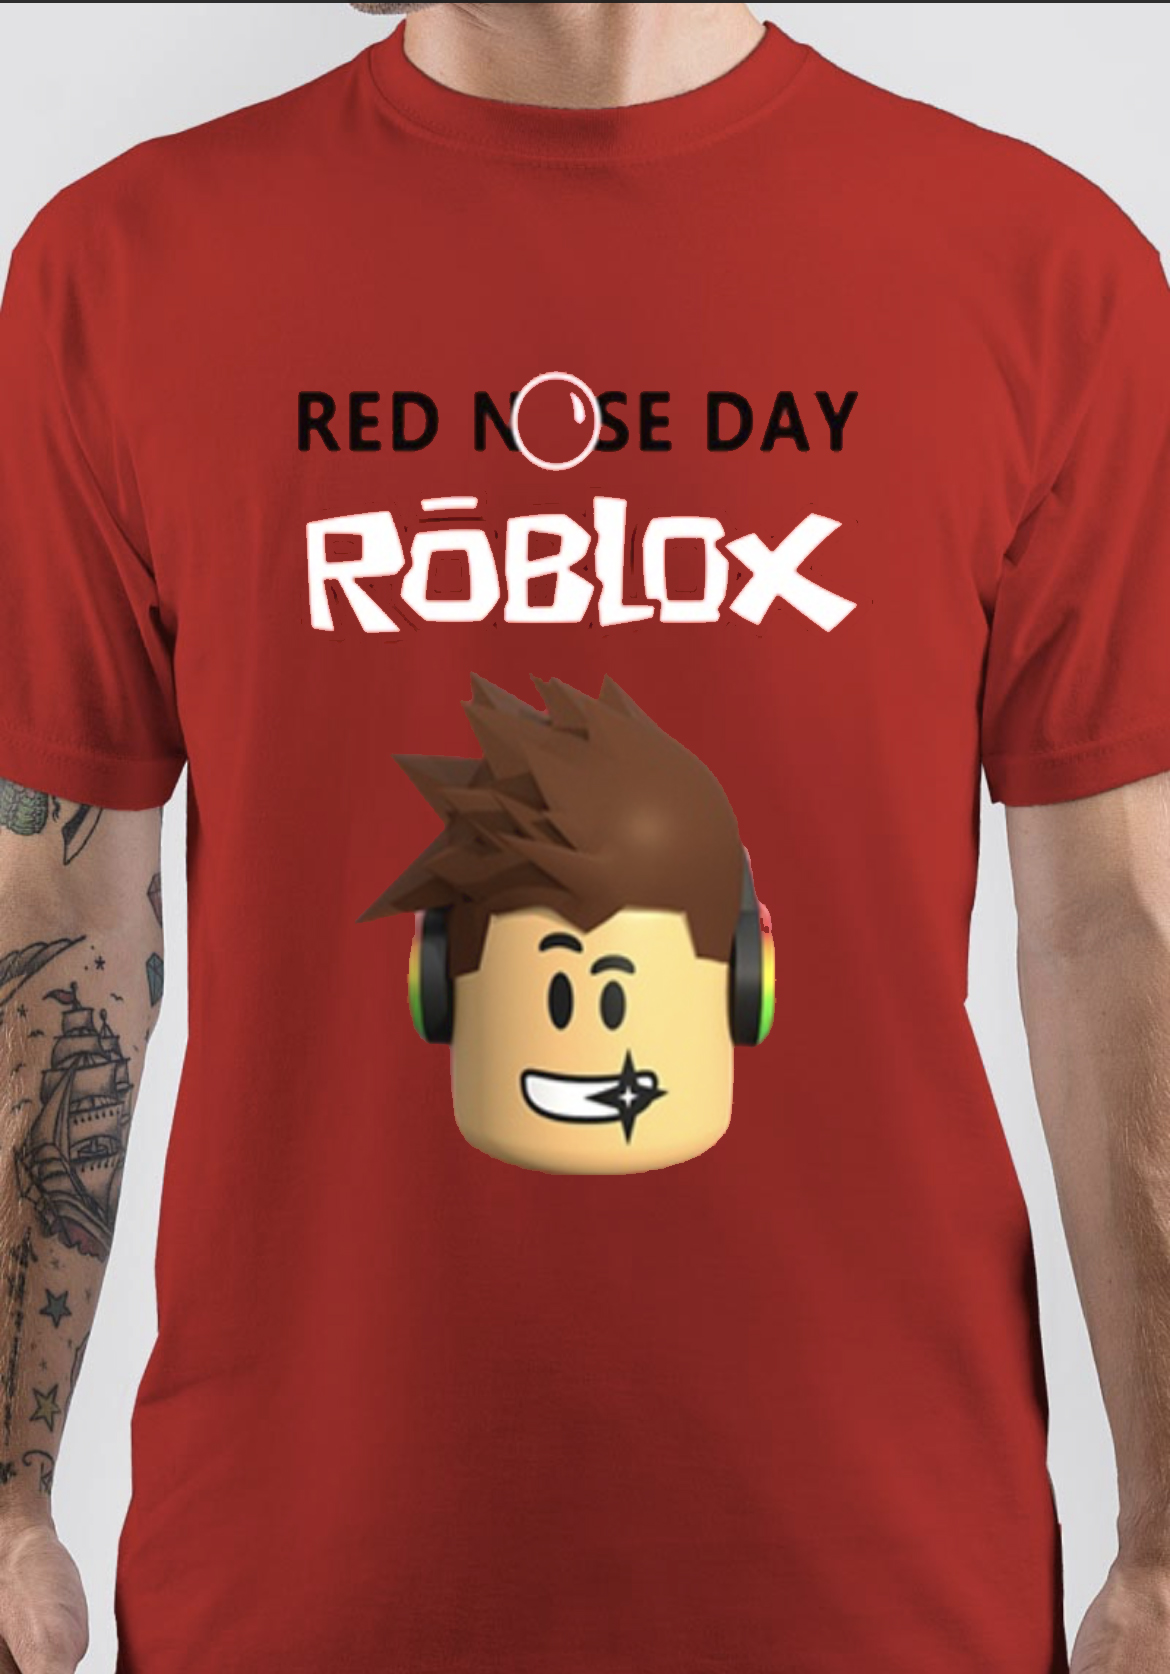 Roblox Xbox One Kid's T Shirt 100% Cotton 